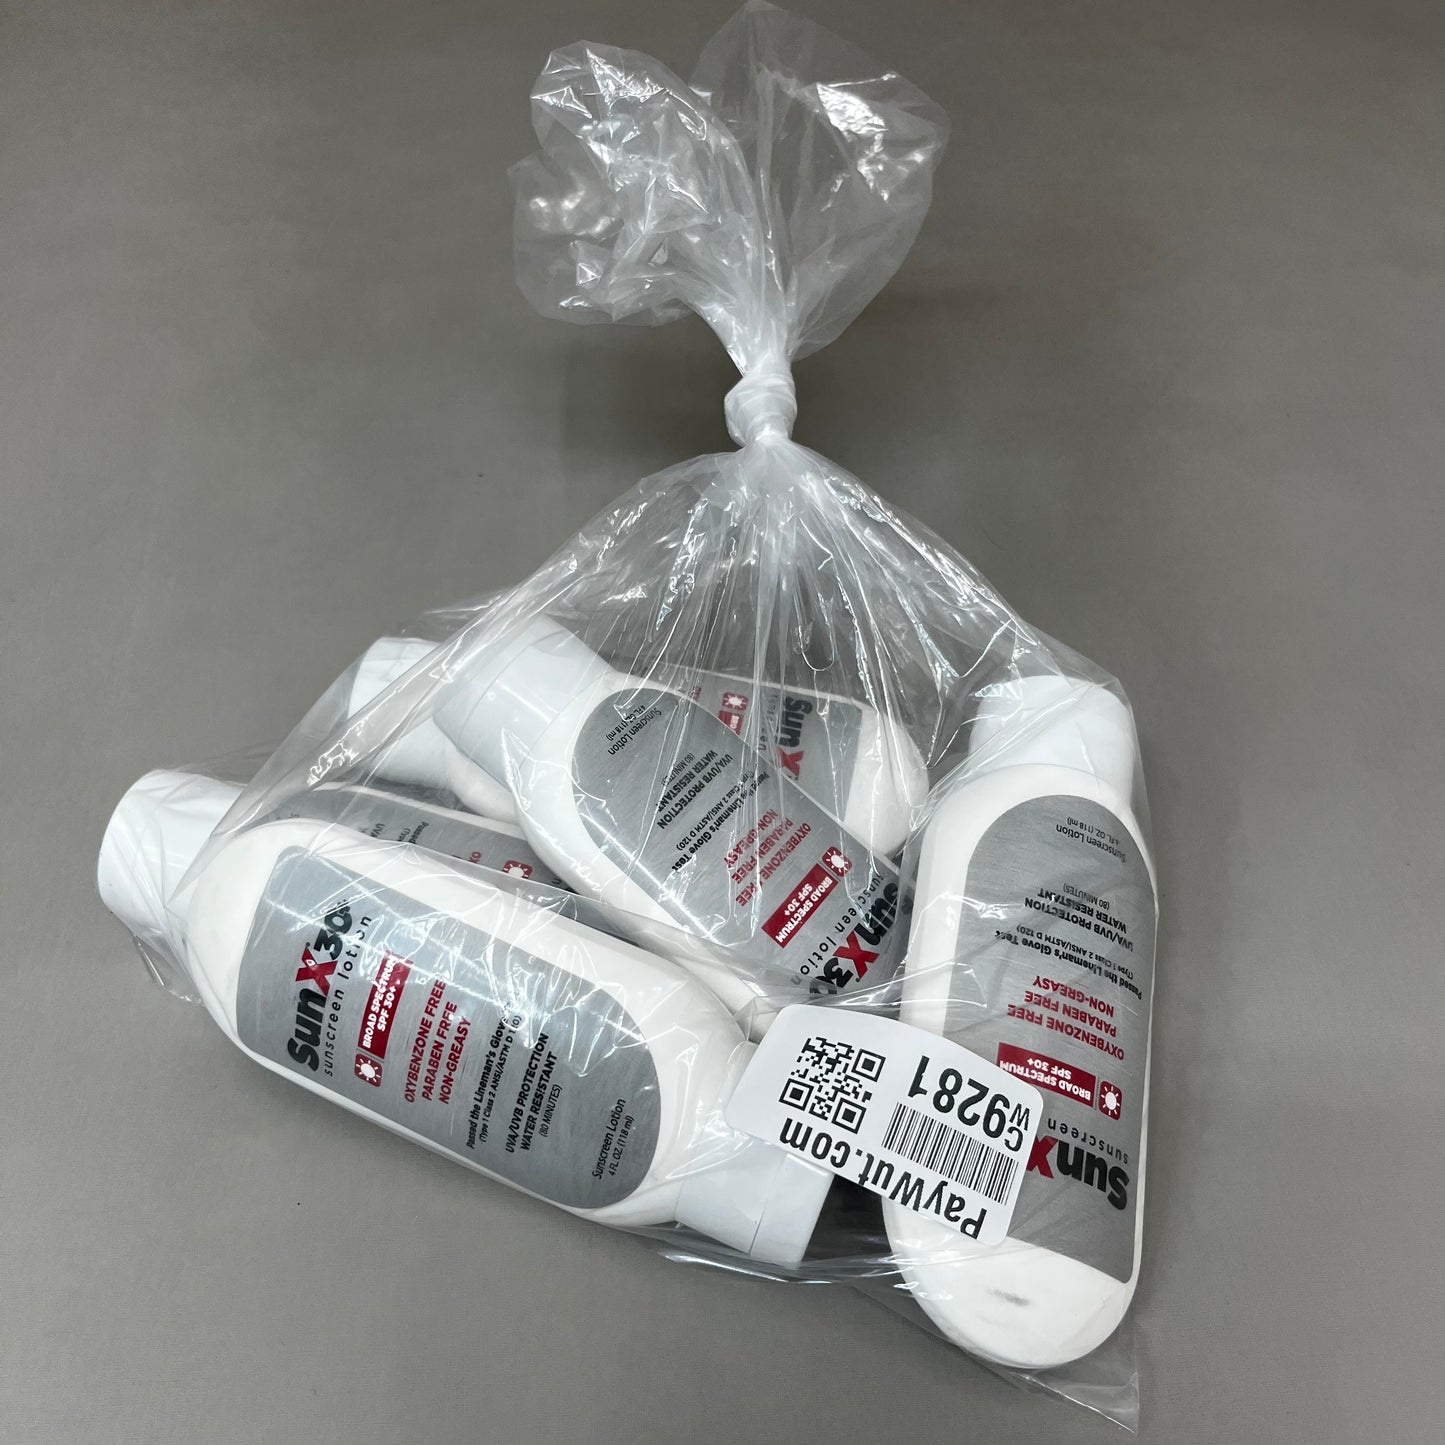 CORTEX 5 Pack! SUNX Sunscreen Lotion Tottle Bottle SPF 30 4 fl oz. 1PBT3 (New)